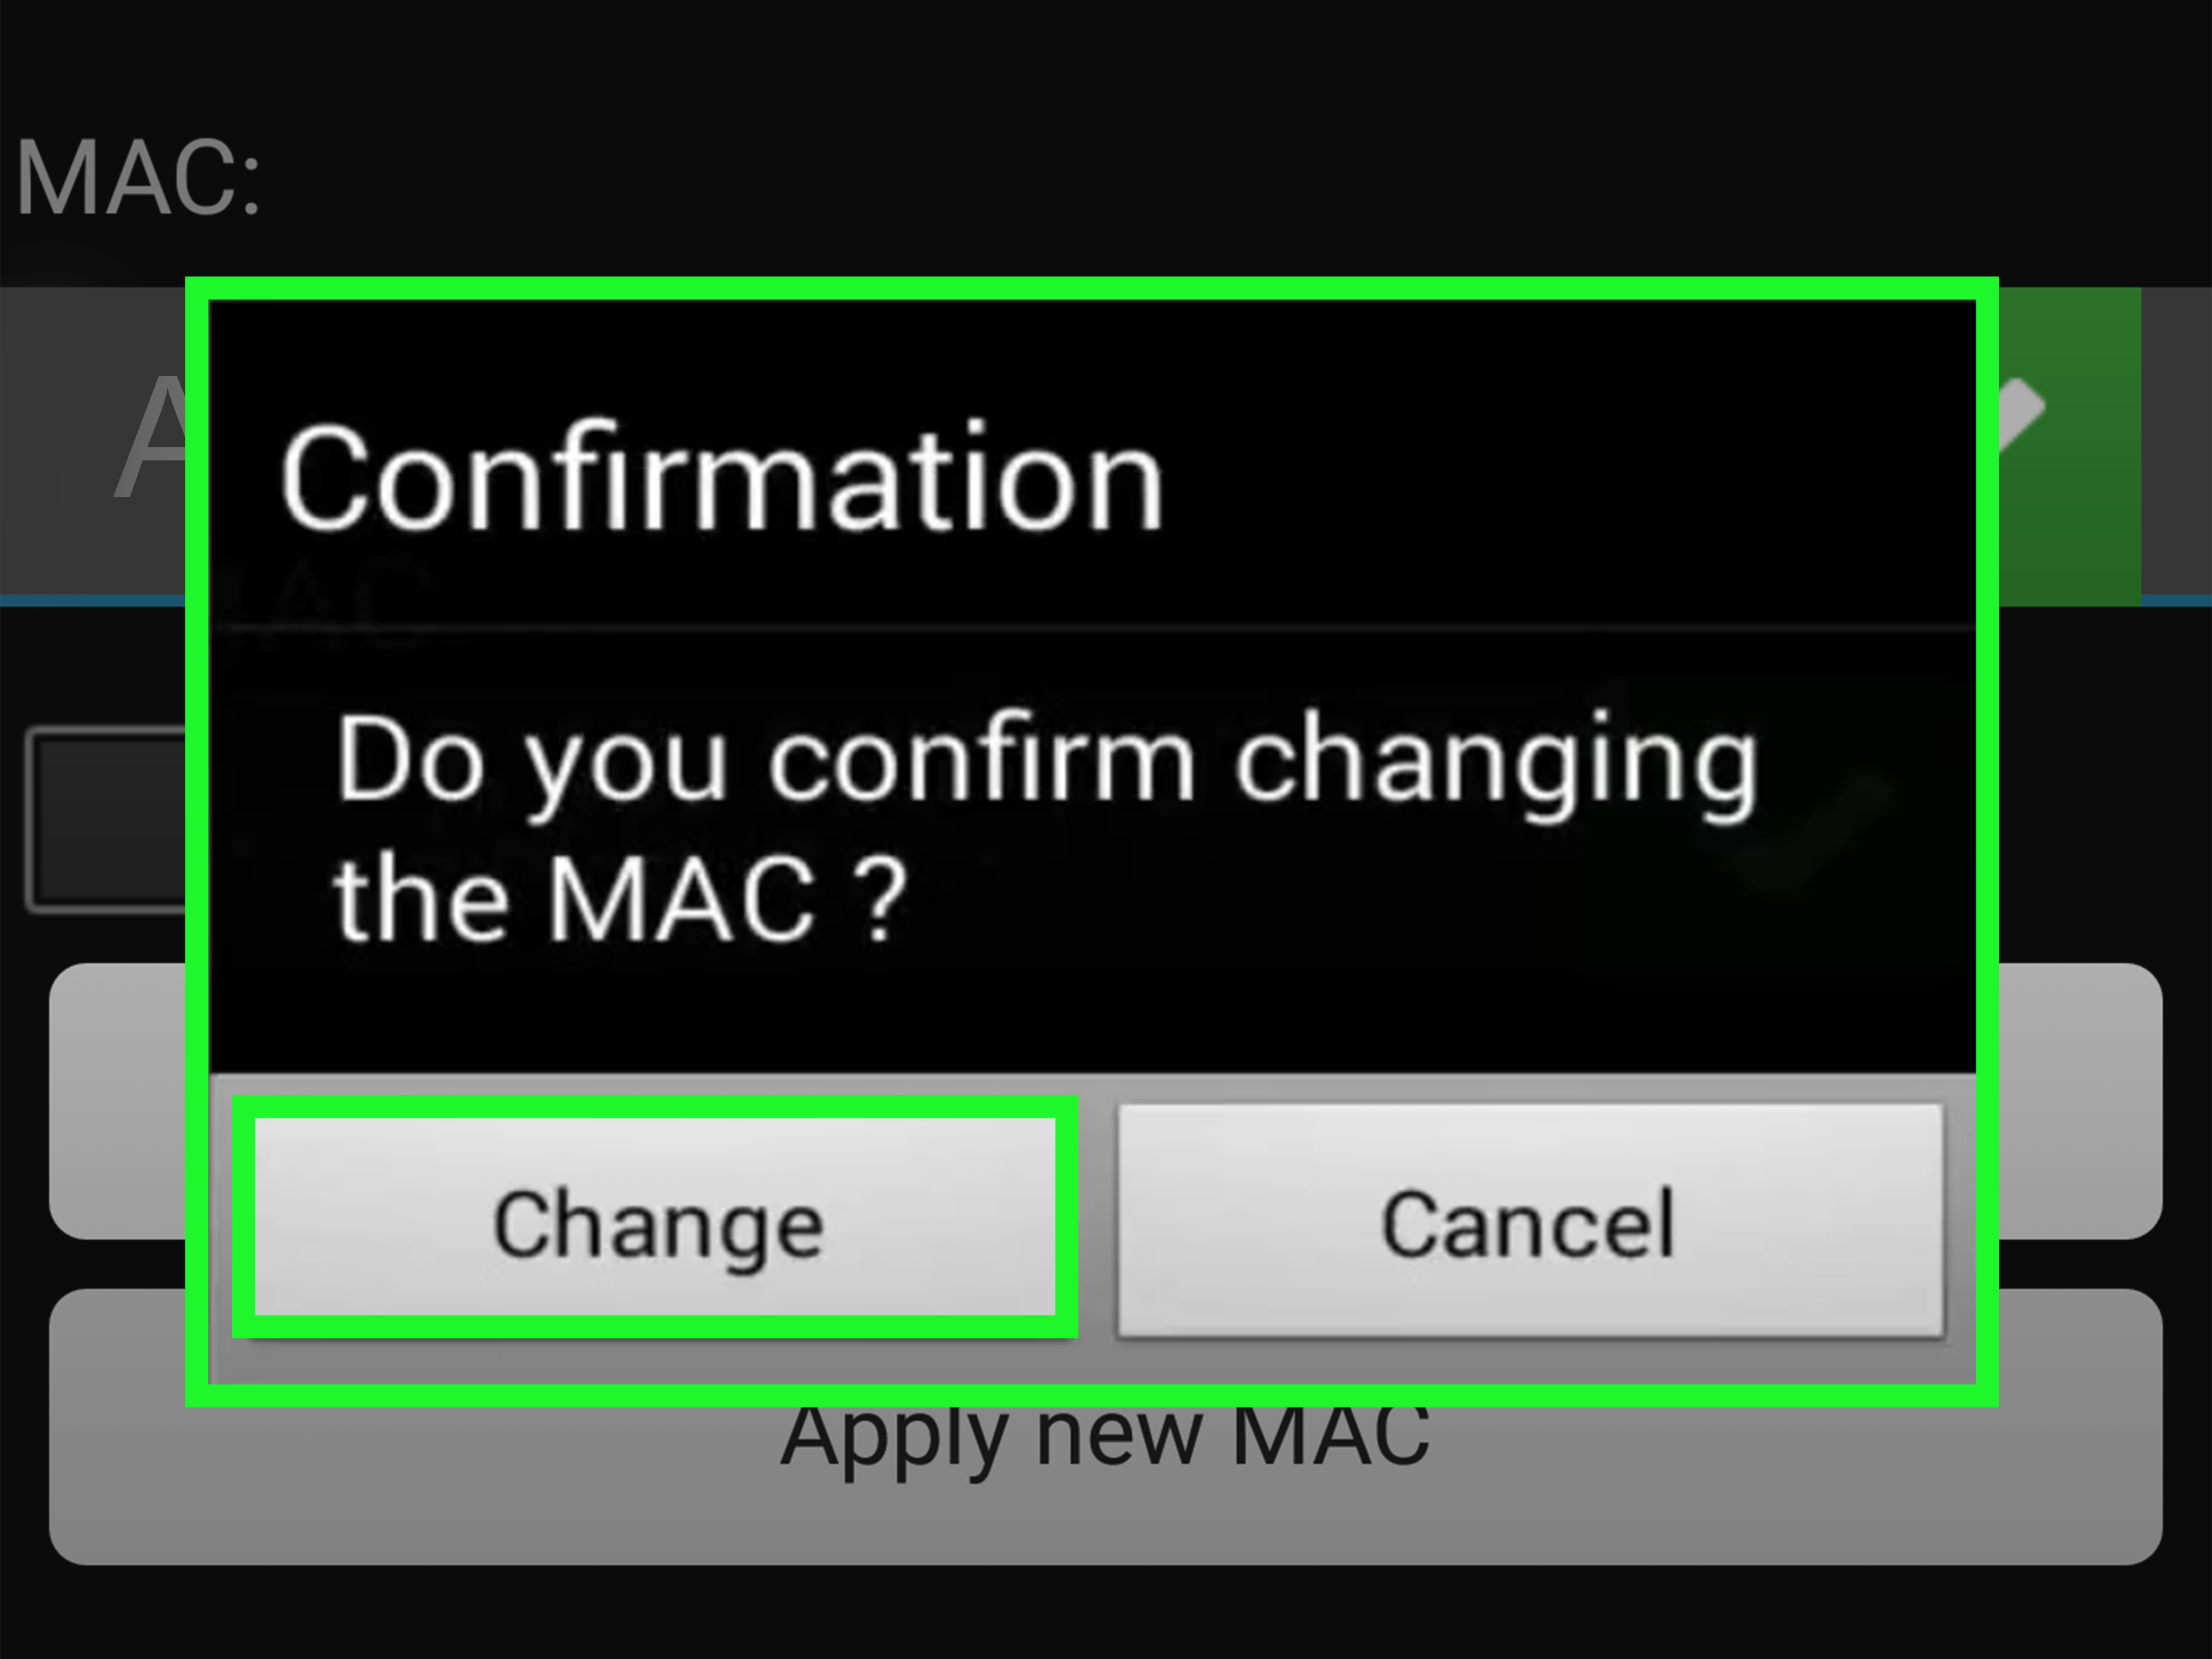 how to change mac address by terminal emulator